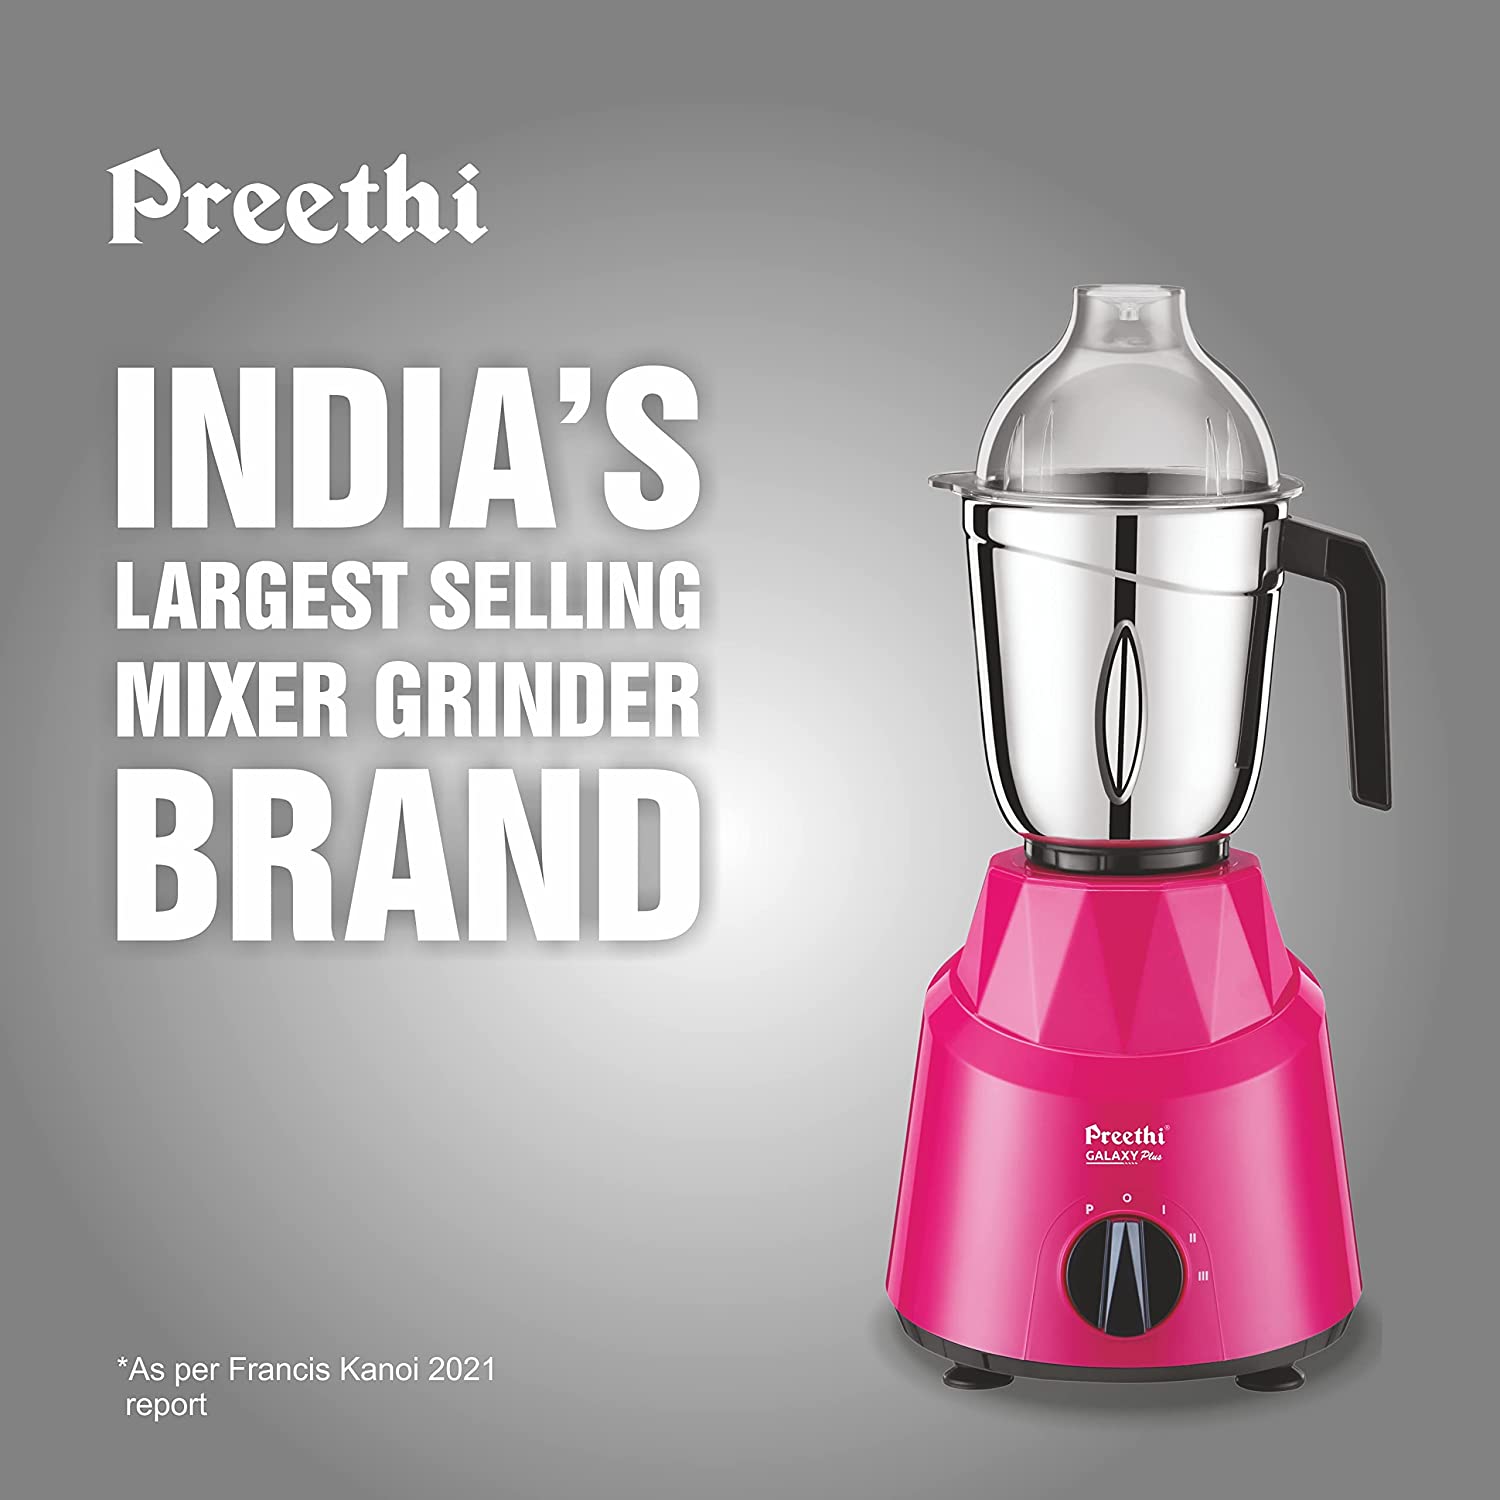 Preethi Galaxy Plus MG-250 Mixer grinder, 750 watt, Pink/Black, 4 Jars - Super Extractor juicer Jar, Vega W5 Motor with 5yr Warranty & Lifelong Free Service